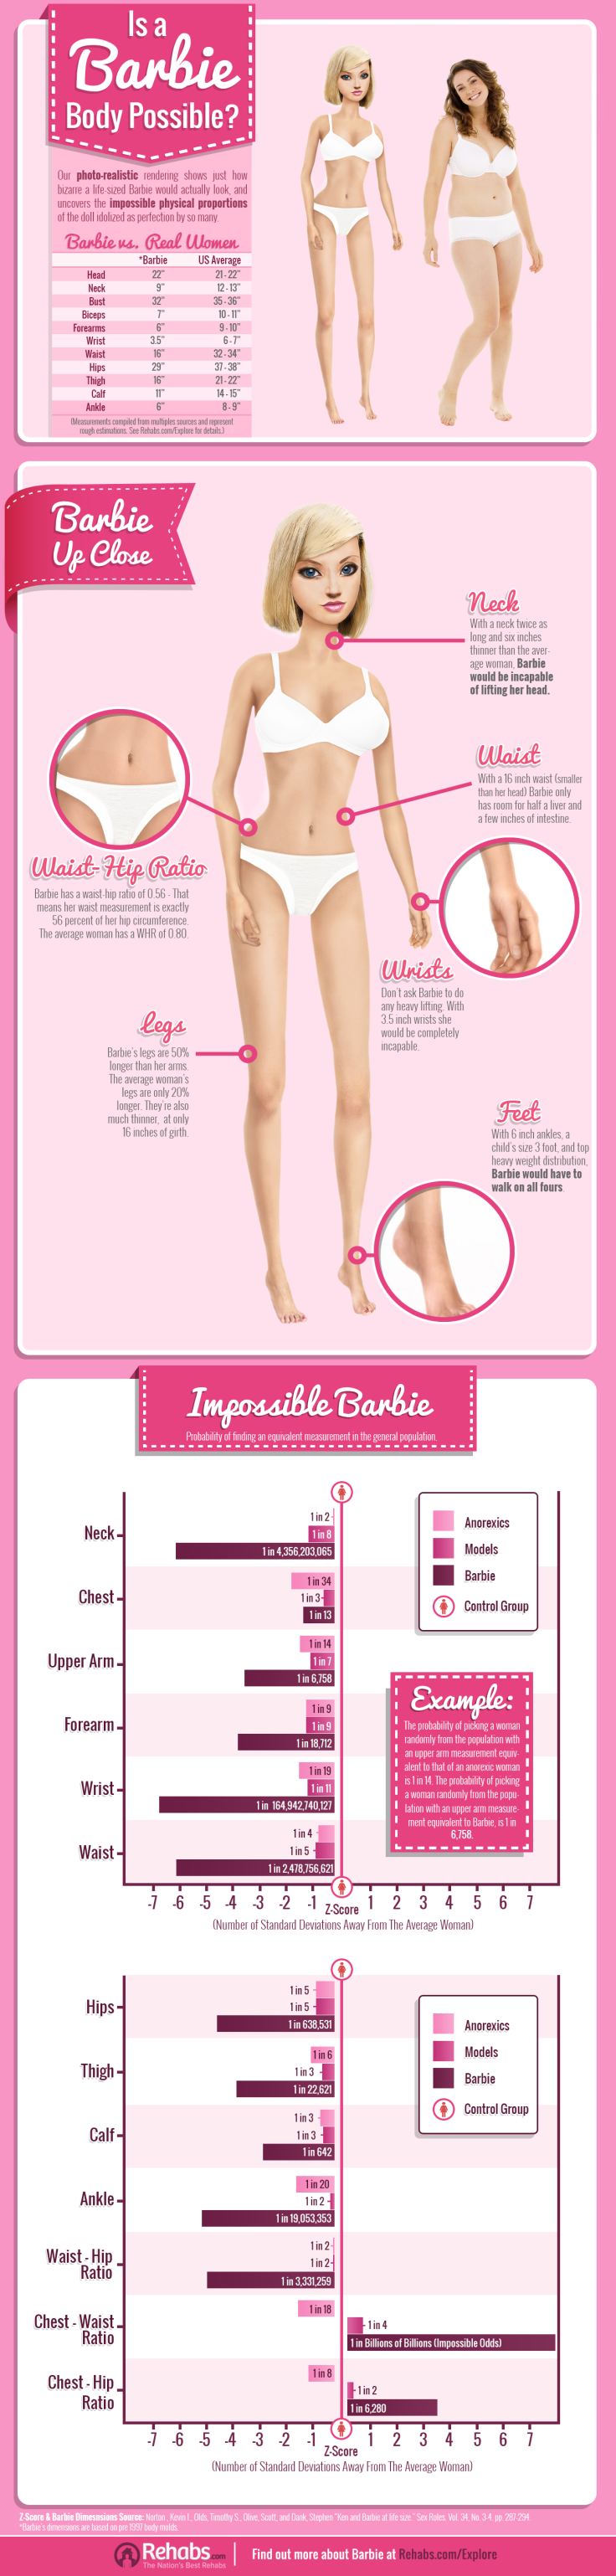 barbie infographic